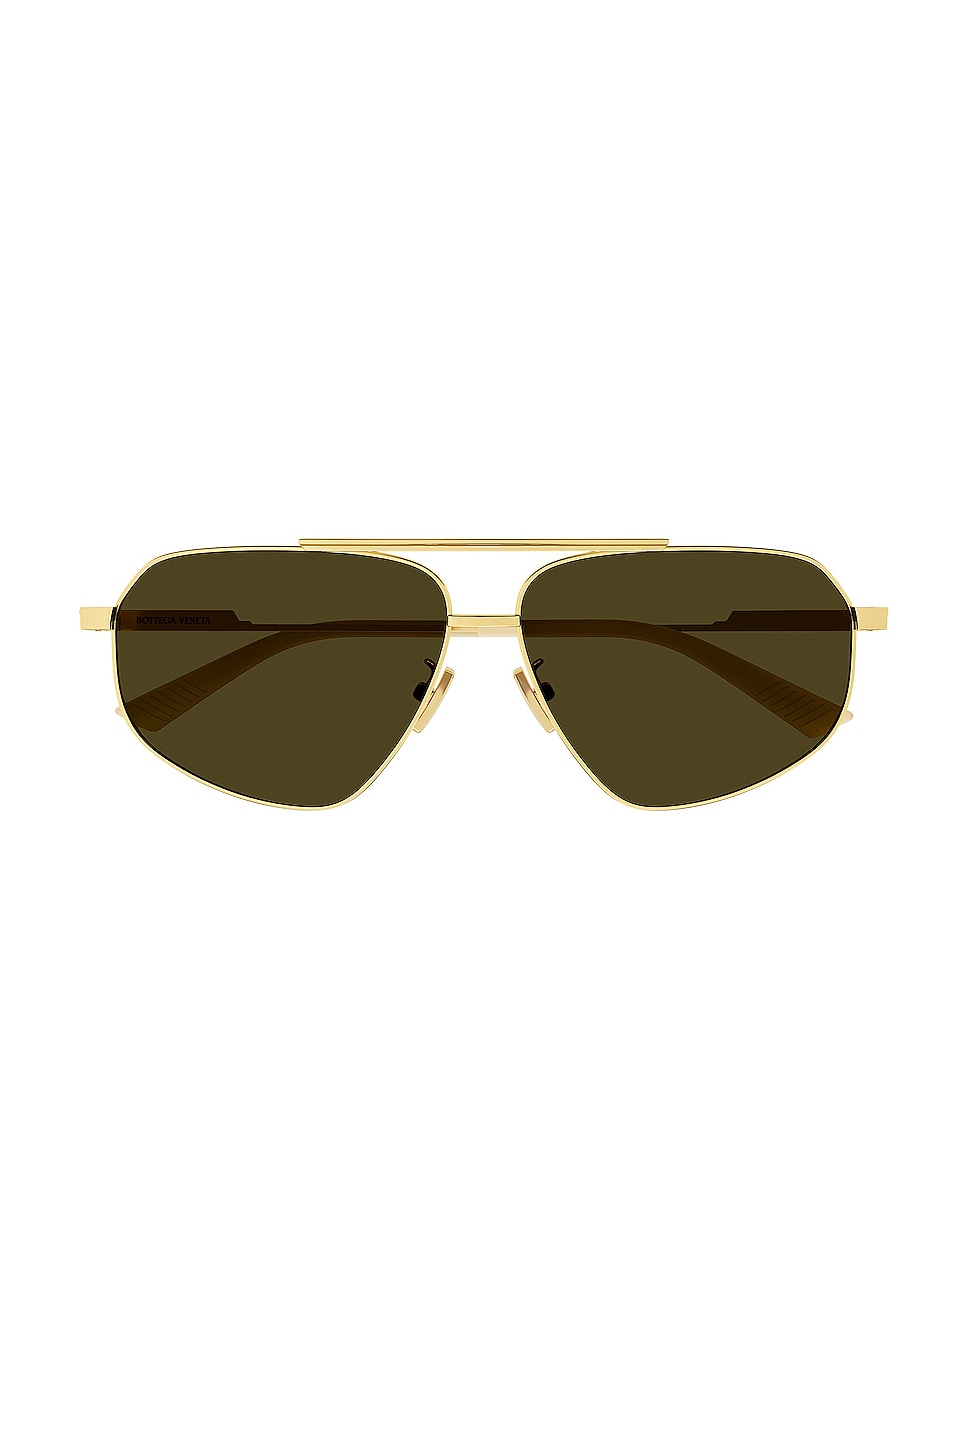 Gold Aviator metal sunglasses, Bottega Veneta